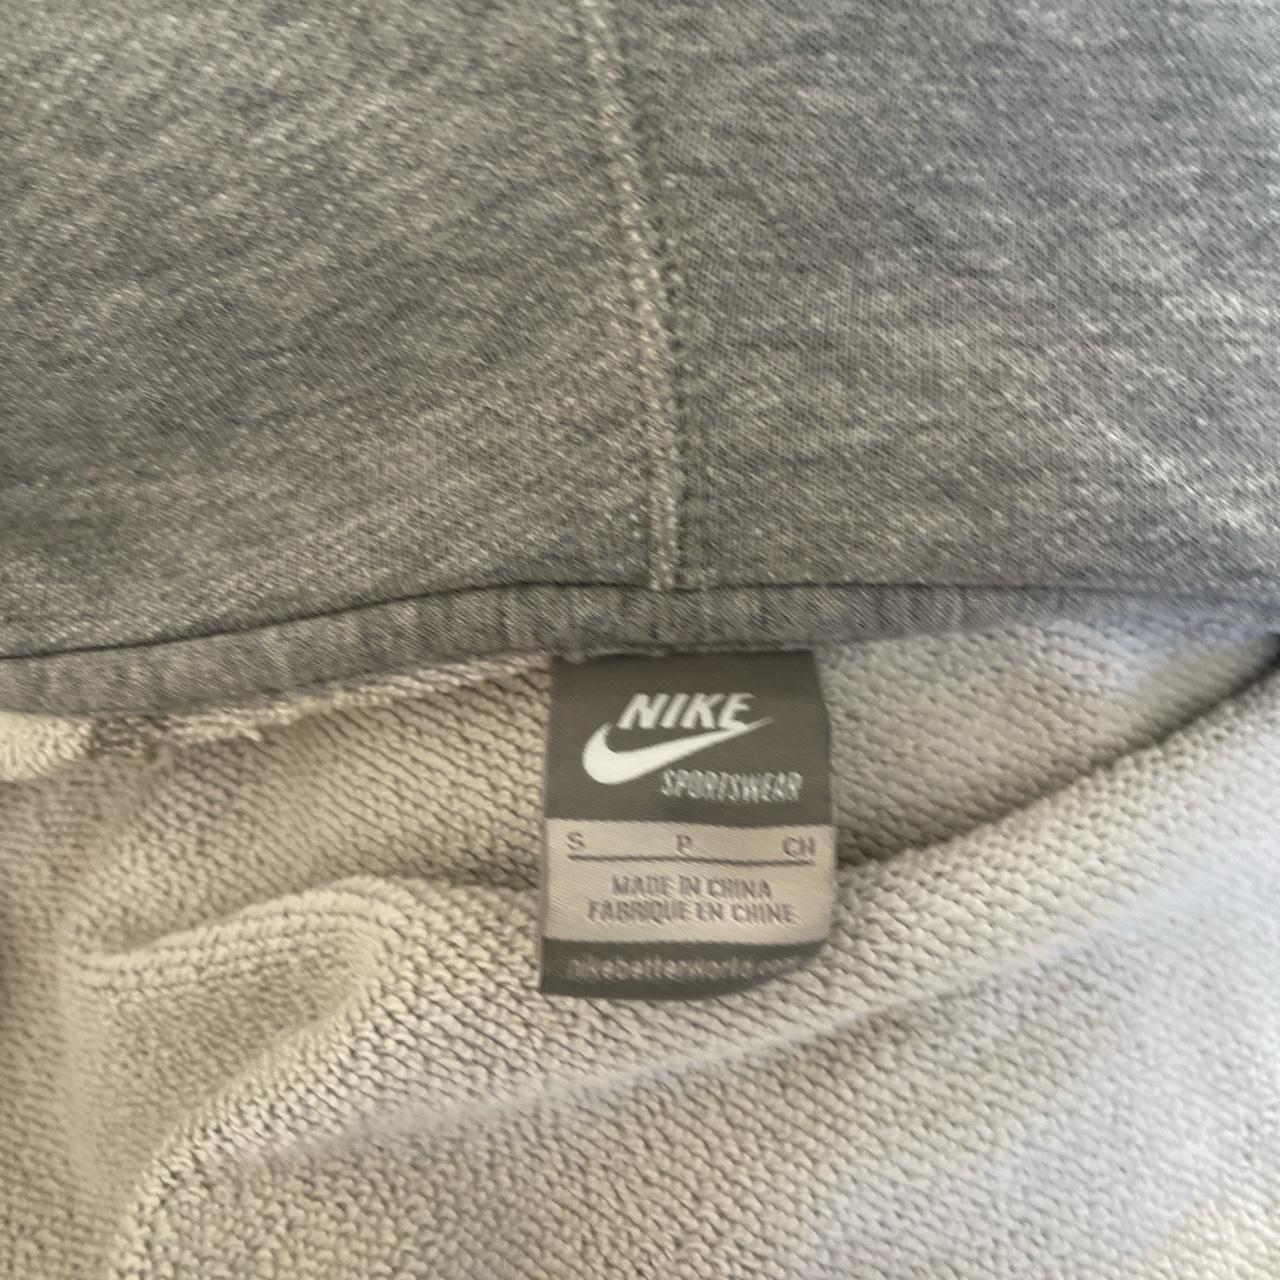 Nike Women's Grey and Black Jacket (4)